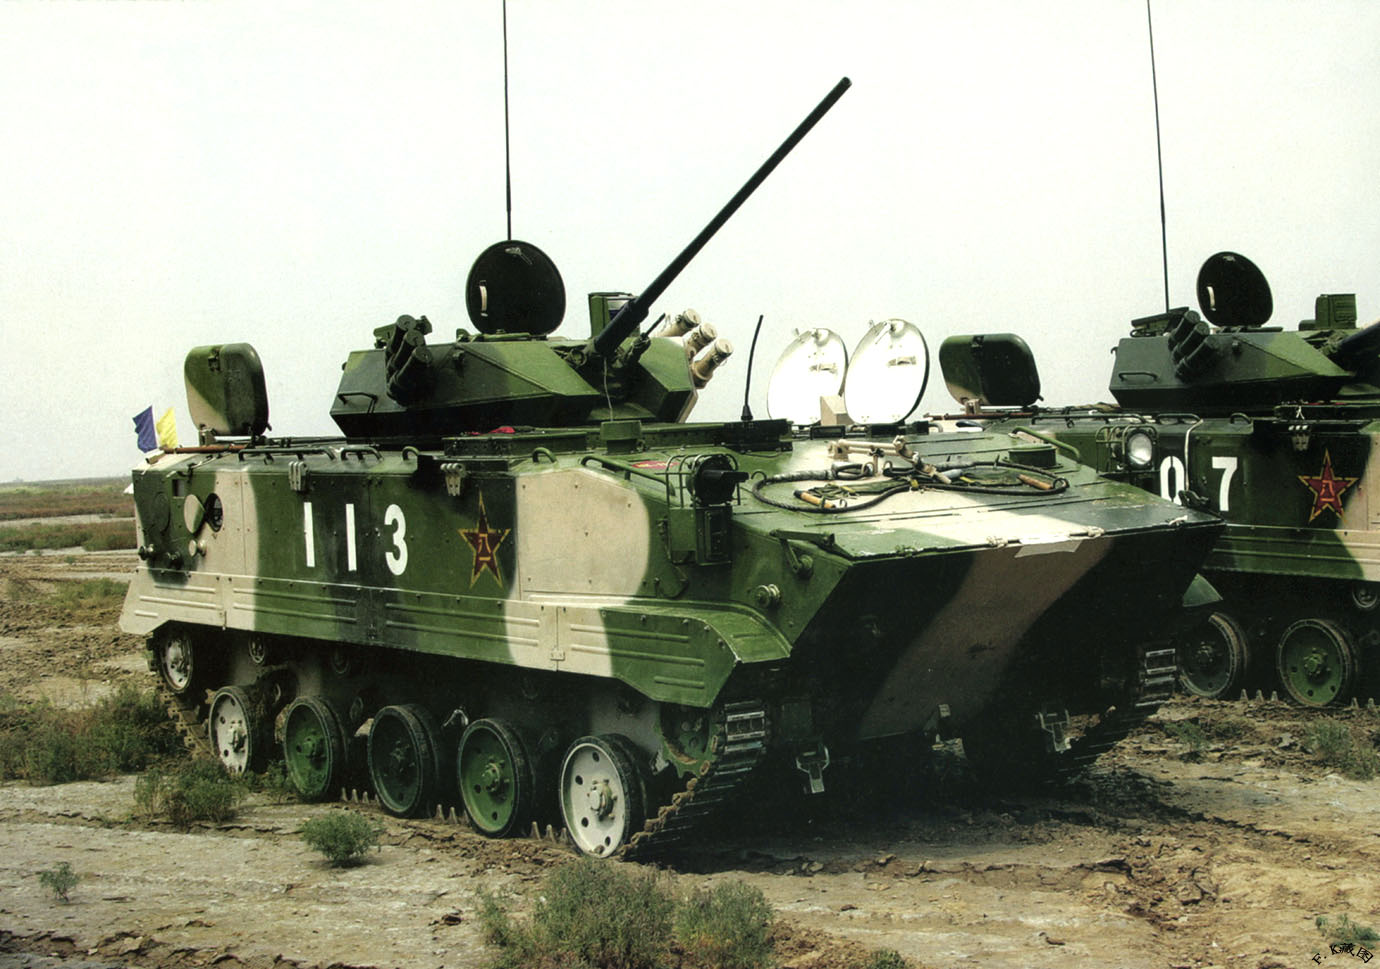 zlc-2000_wz506_airborne_armoured_infantry_fighting_combat_vehicle_China_Chinese_Army_012.jpg